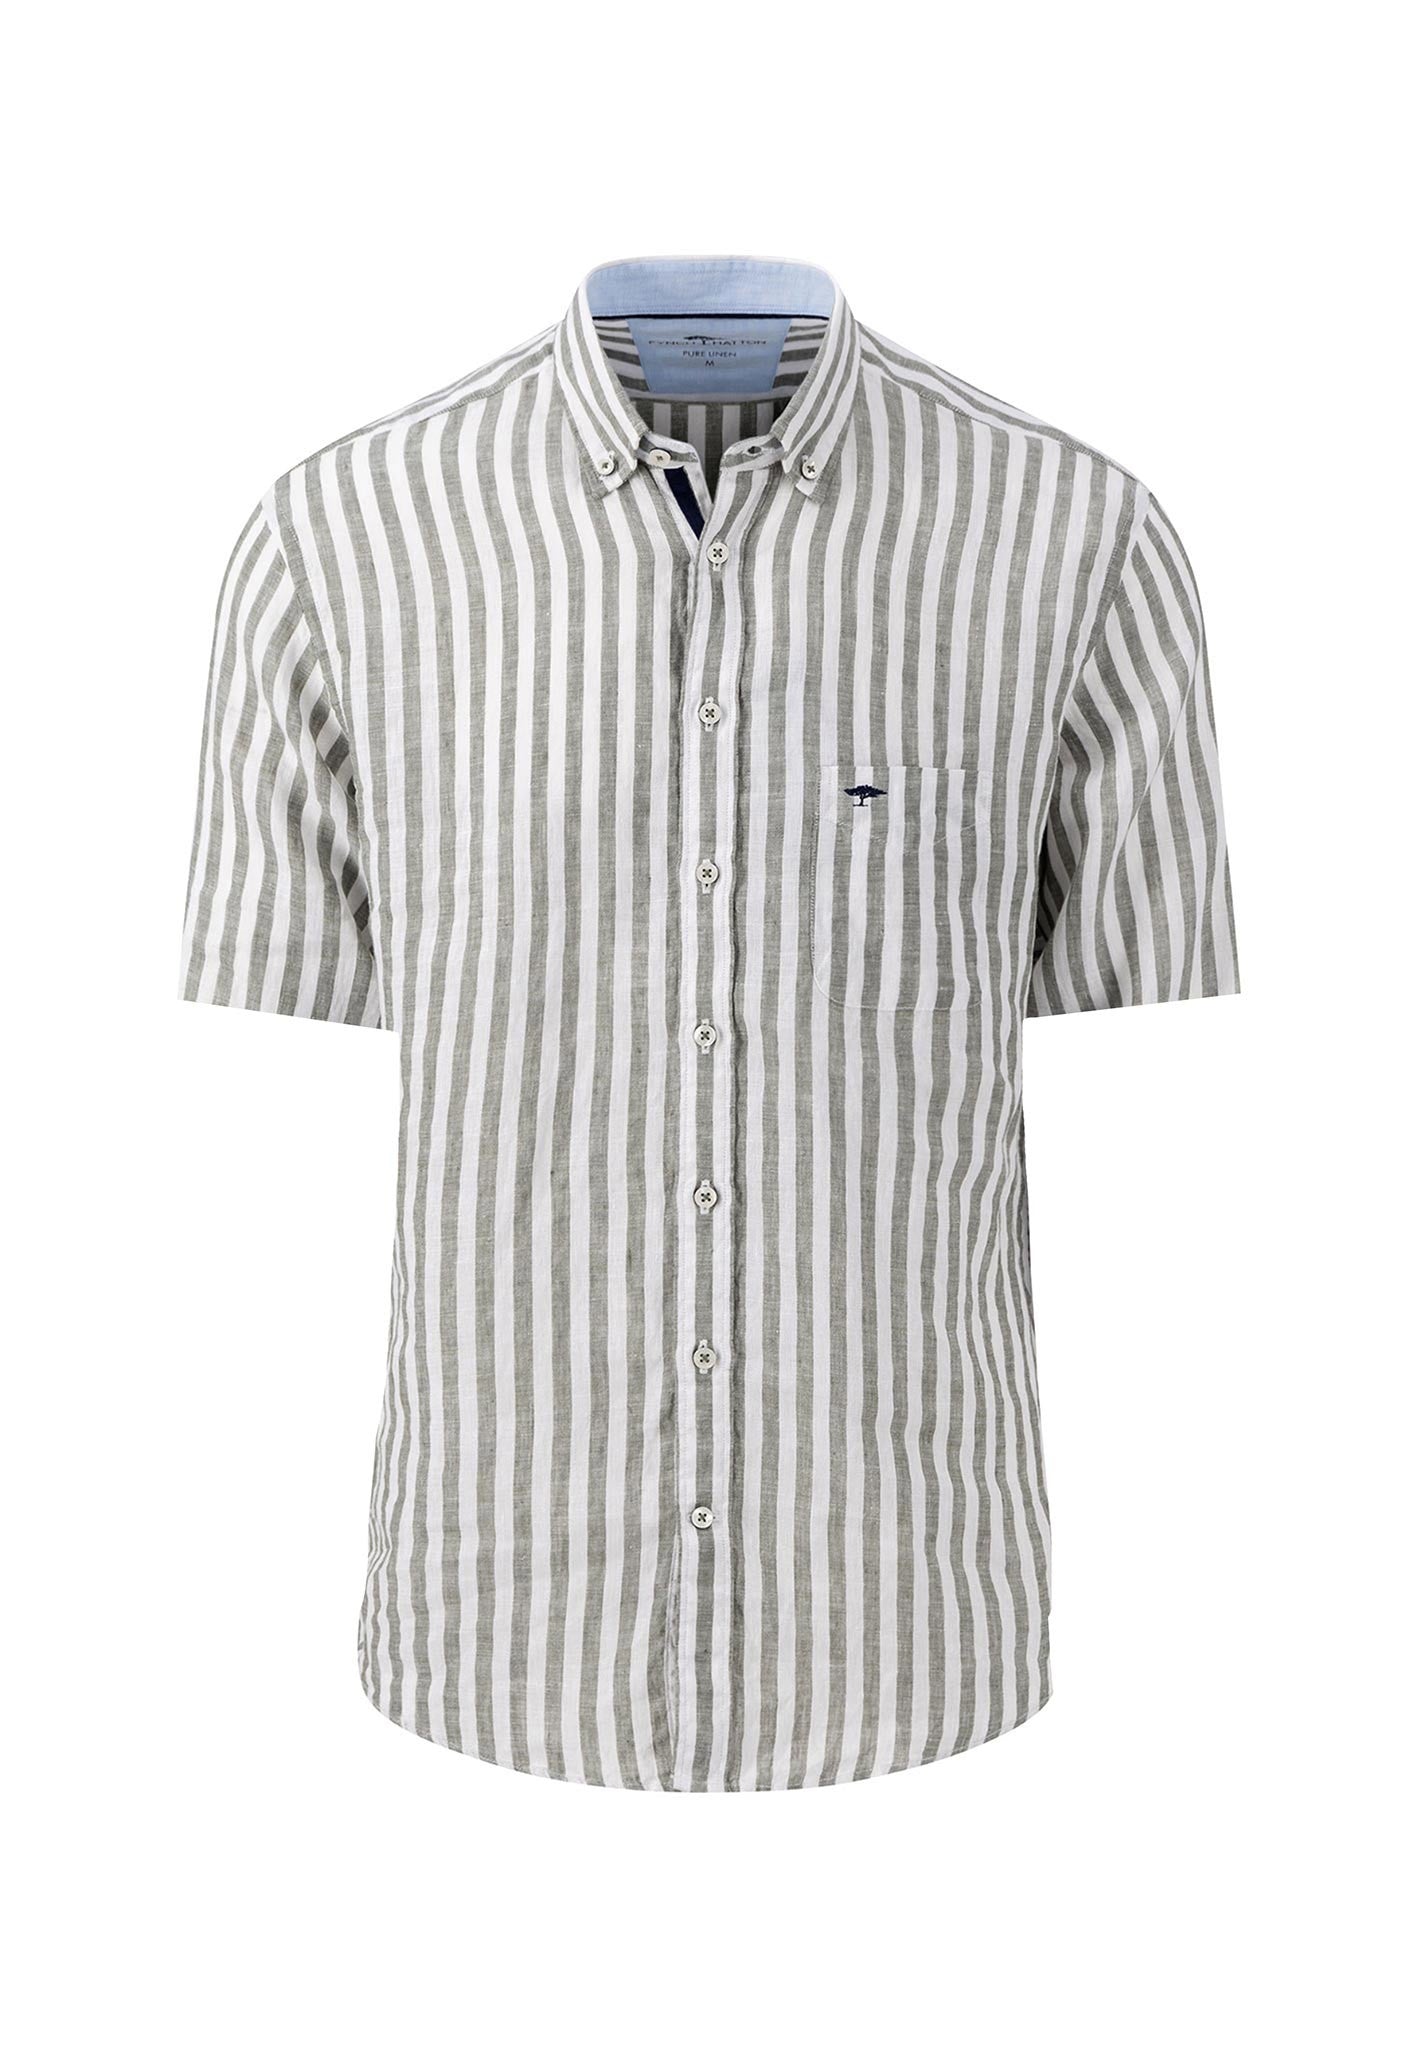 Fynch Hatton Linen Stripes Short Sleeves Shirt Olive